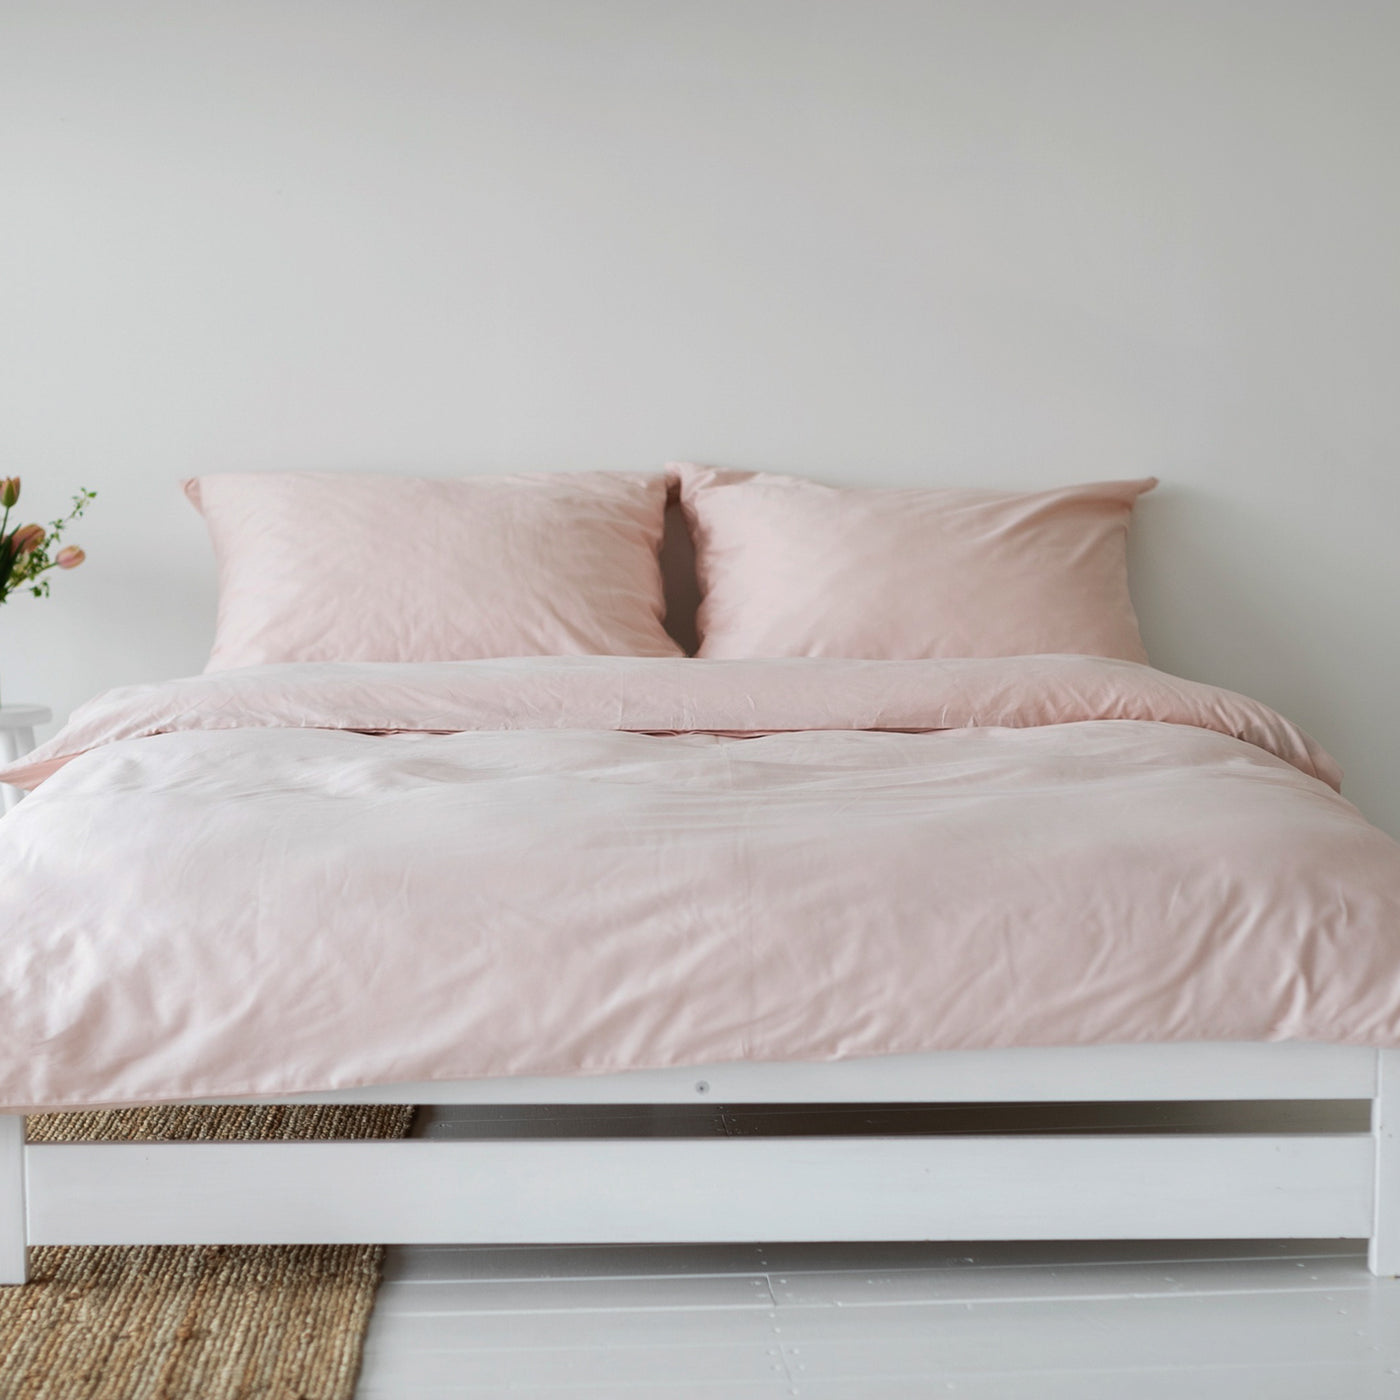 Soft pink satin sheets made of organic cotton